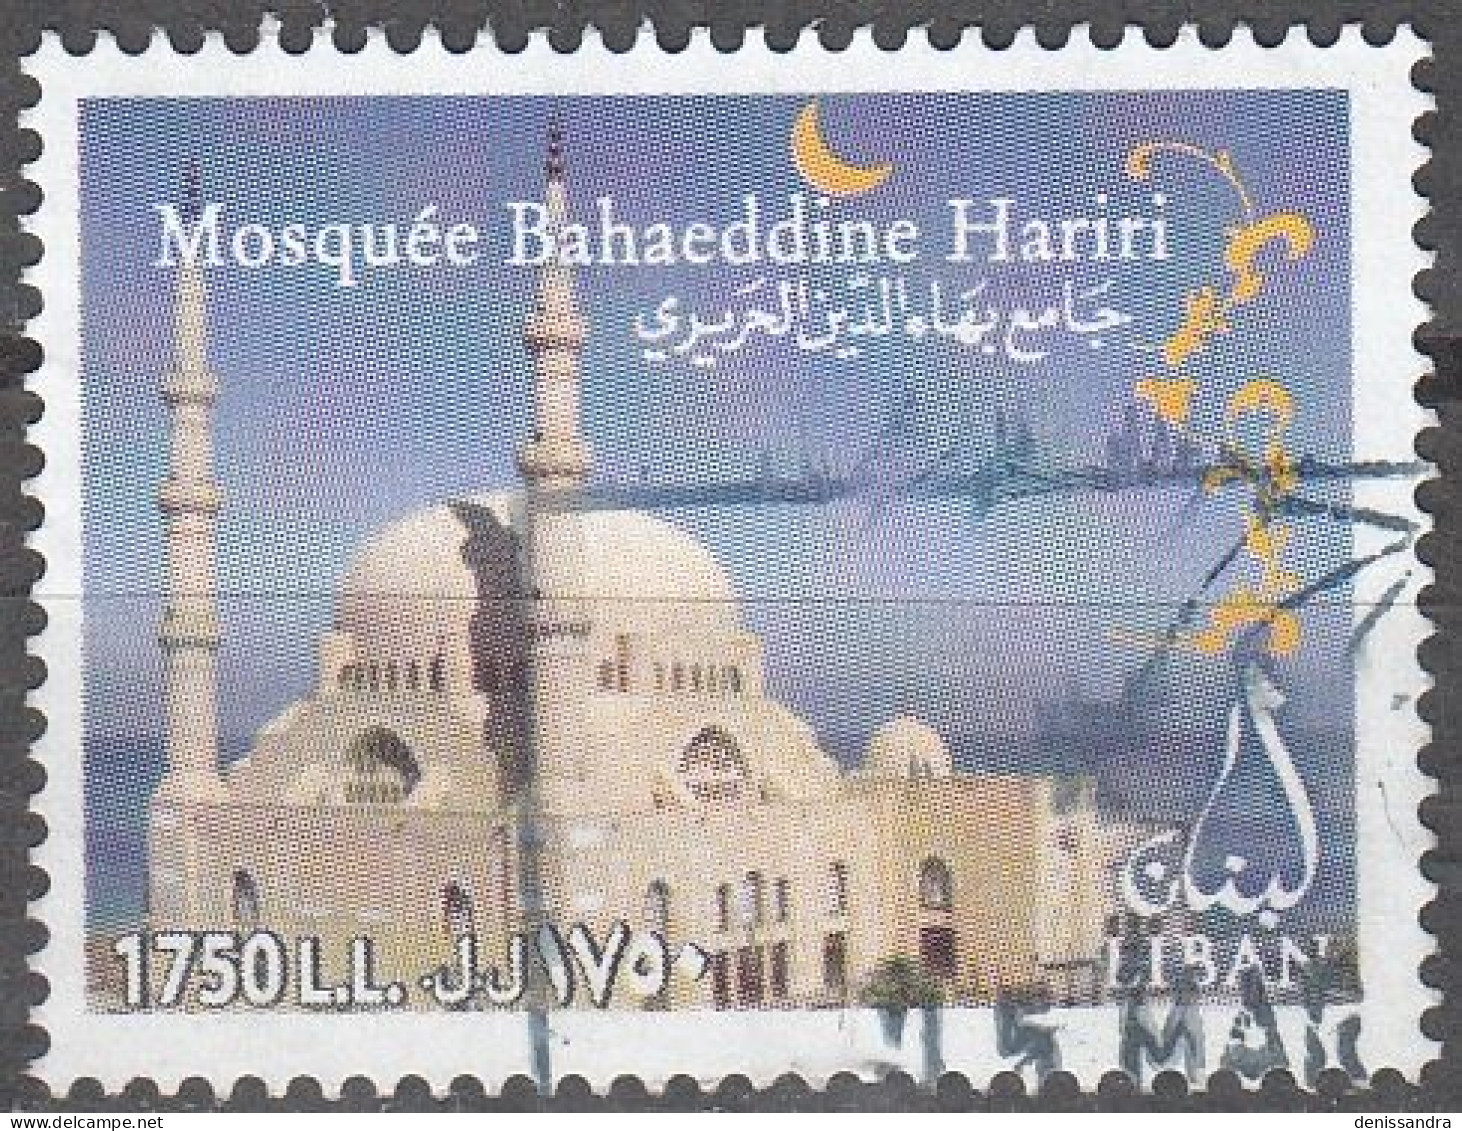 Liban 2005 Michel 1465 O Cote (2007) 3.50 € Mosquée Bahaeddine Hariri Cachet Rond - Lebanon